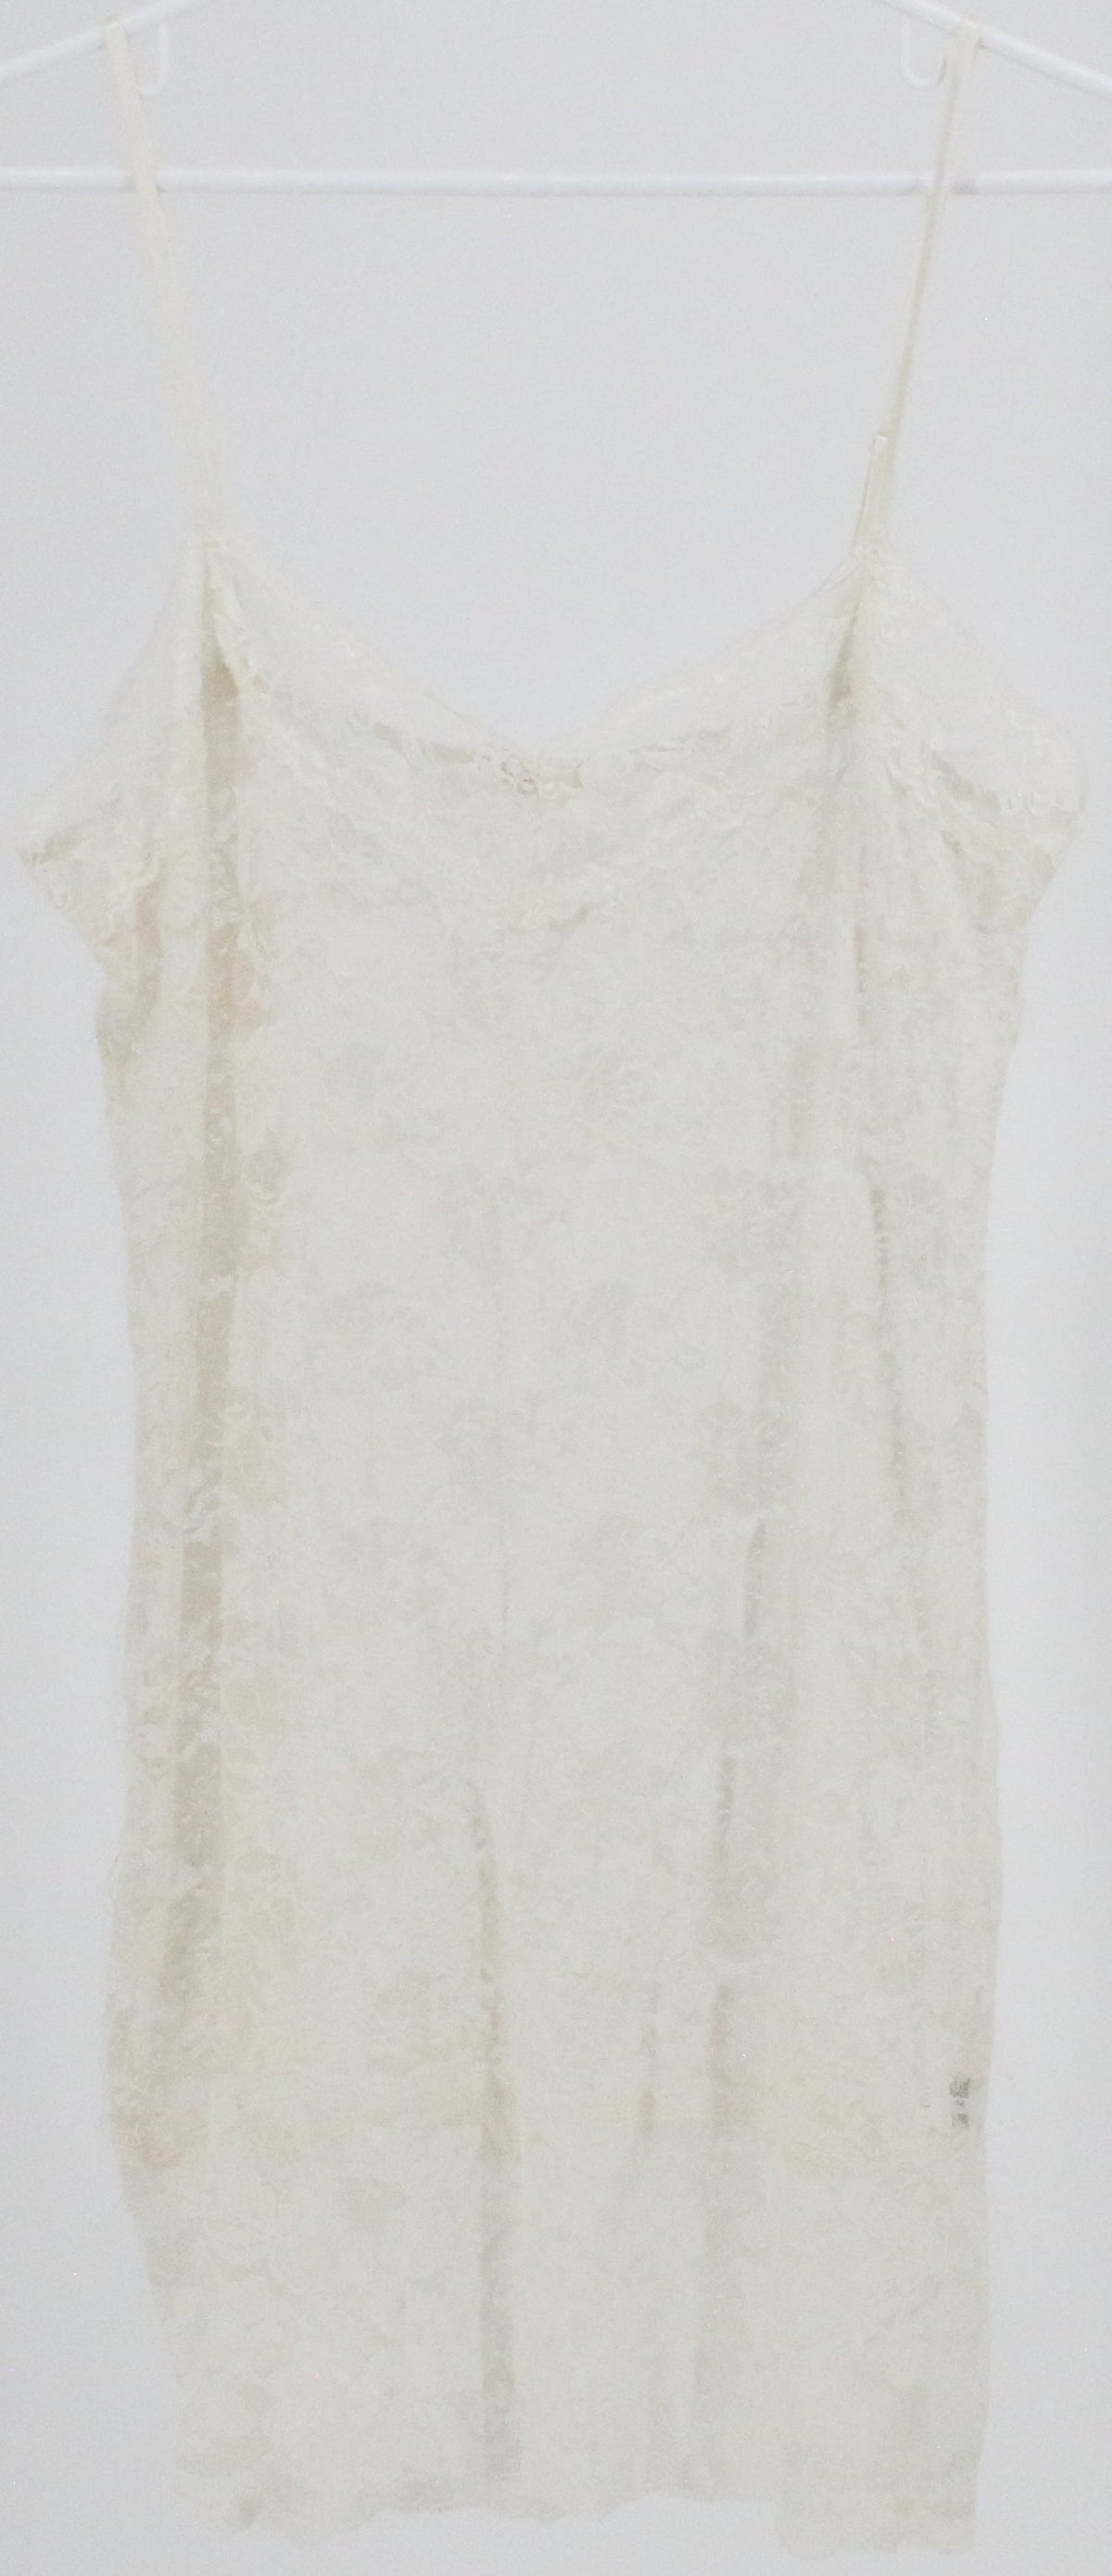 Zenana Outfitters Off White Lace Slip Dress